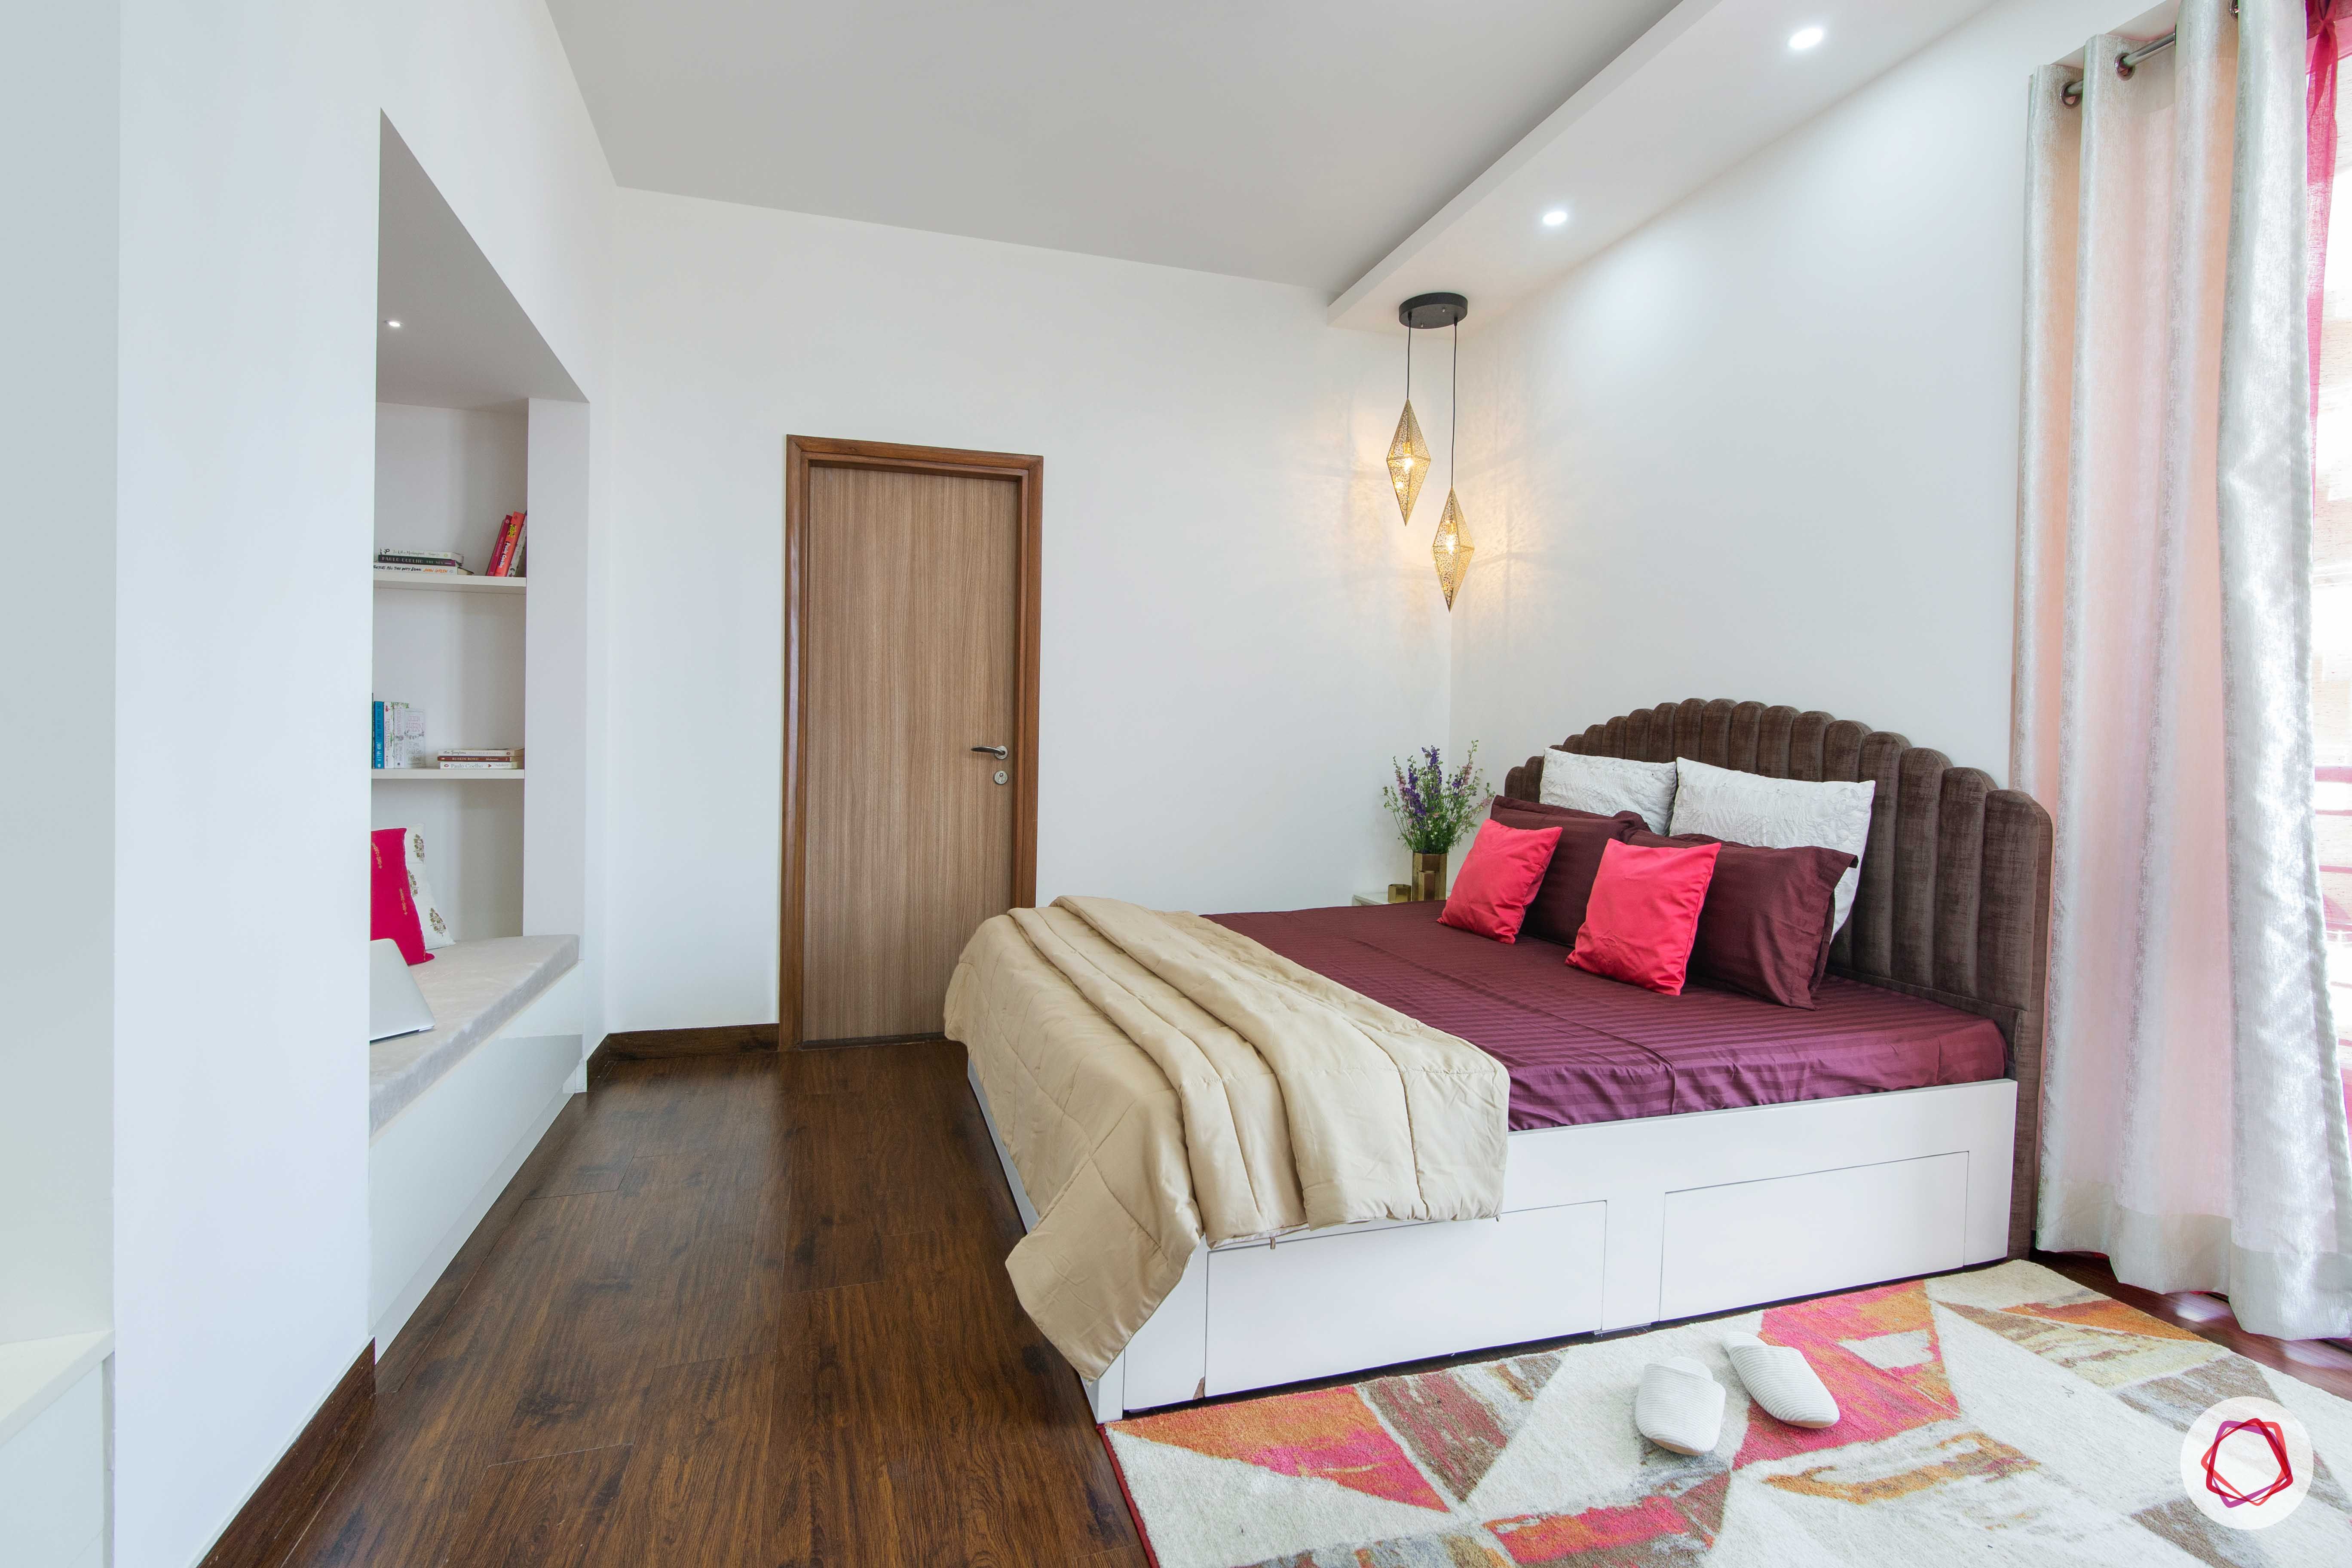 tdi ourania_master bedroom_pendant lights_wooden flooring